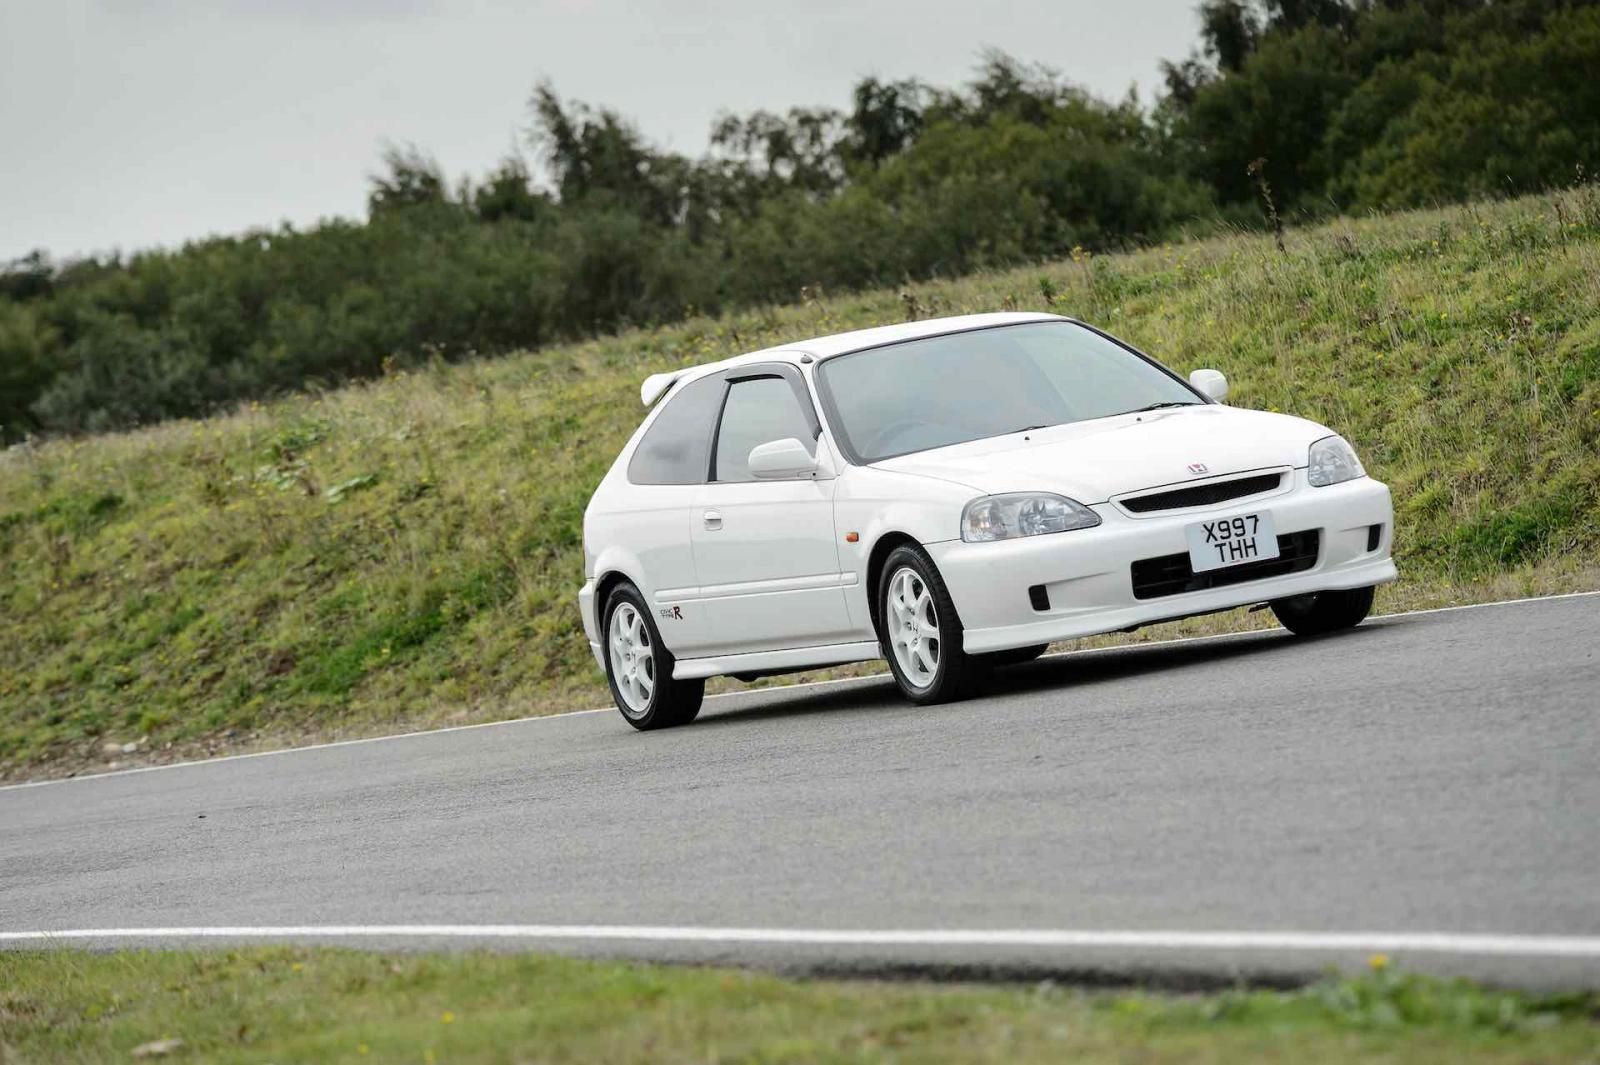 Honda Civic Type R 1997 bianca